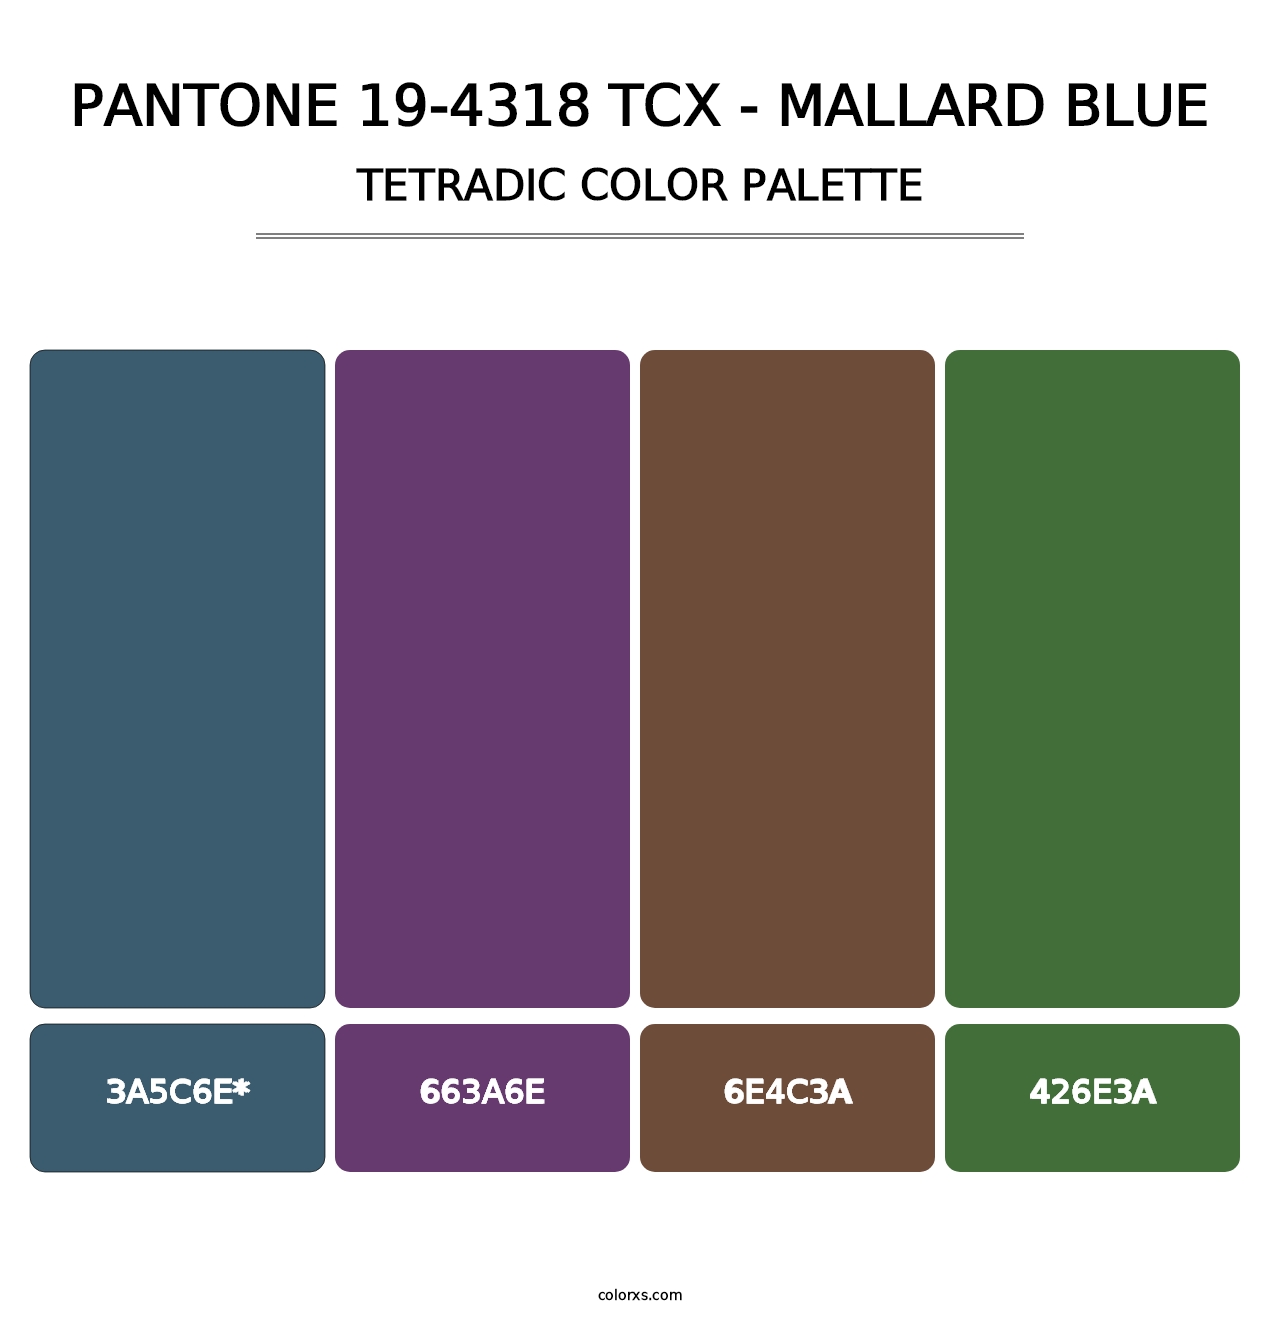 PANTONE 19-4318 TCX - Mallard Blue - Tetradic Color Palette